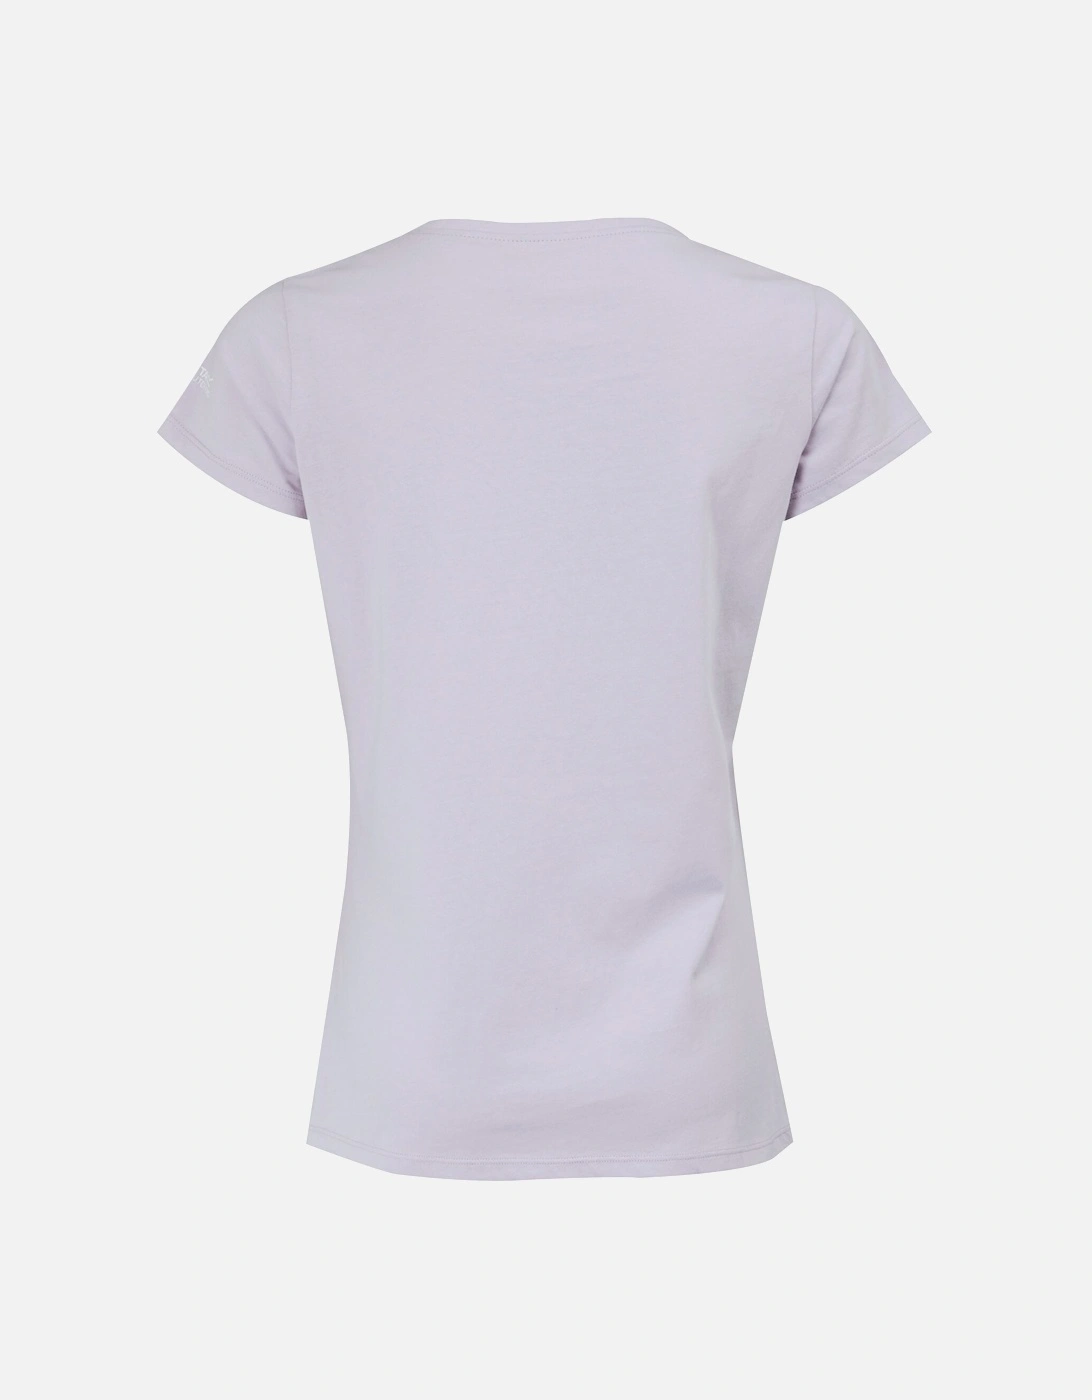 Womens/Ladies Breezed IV Mountain T-Shirt